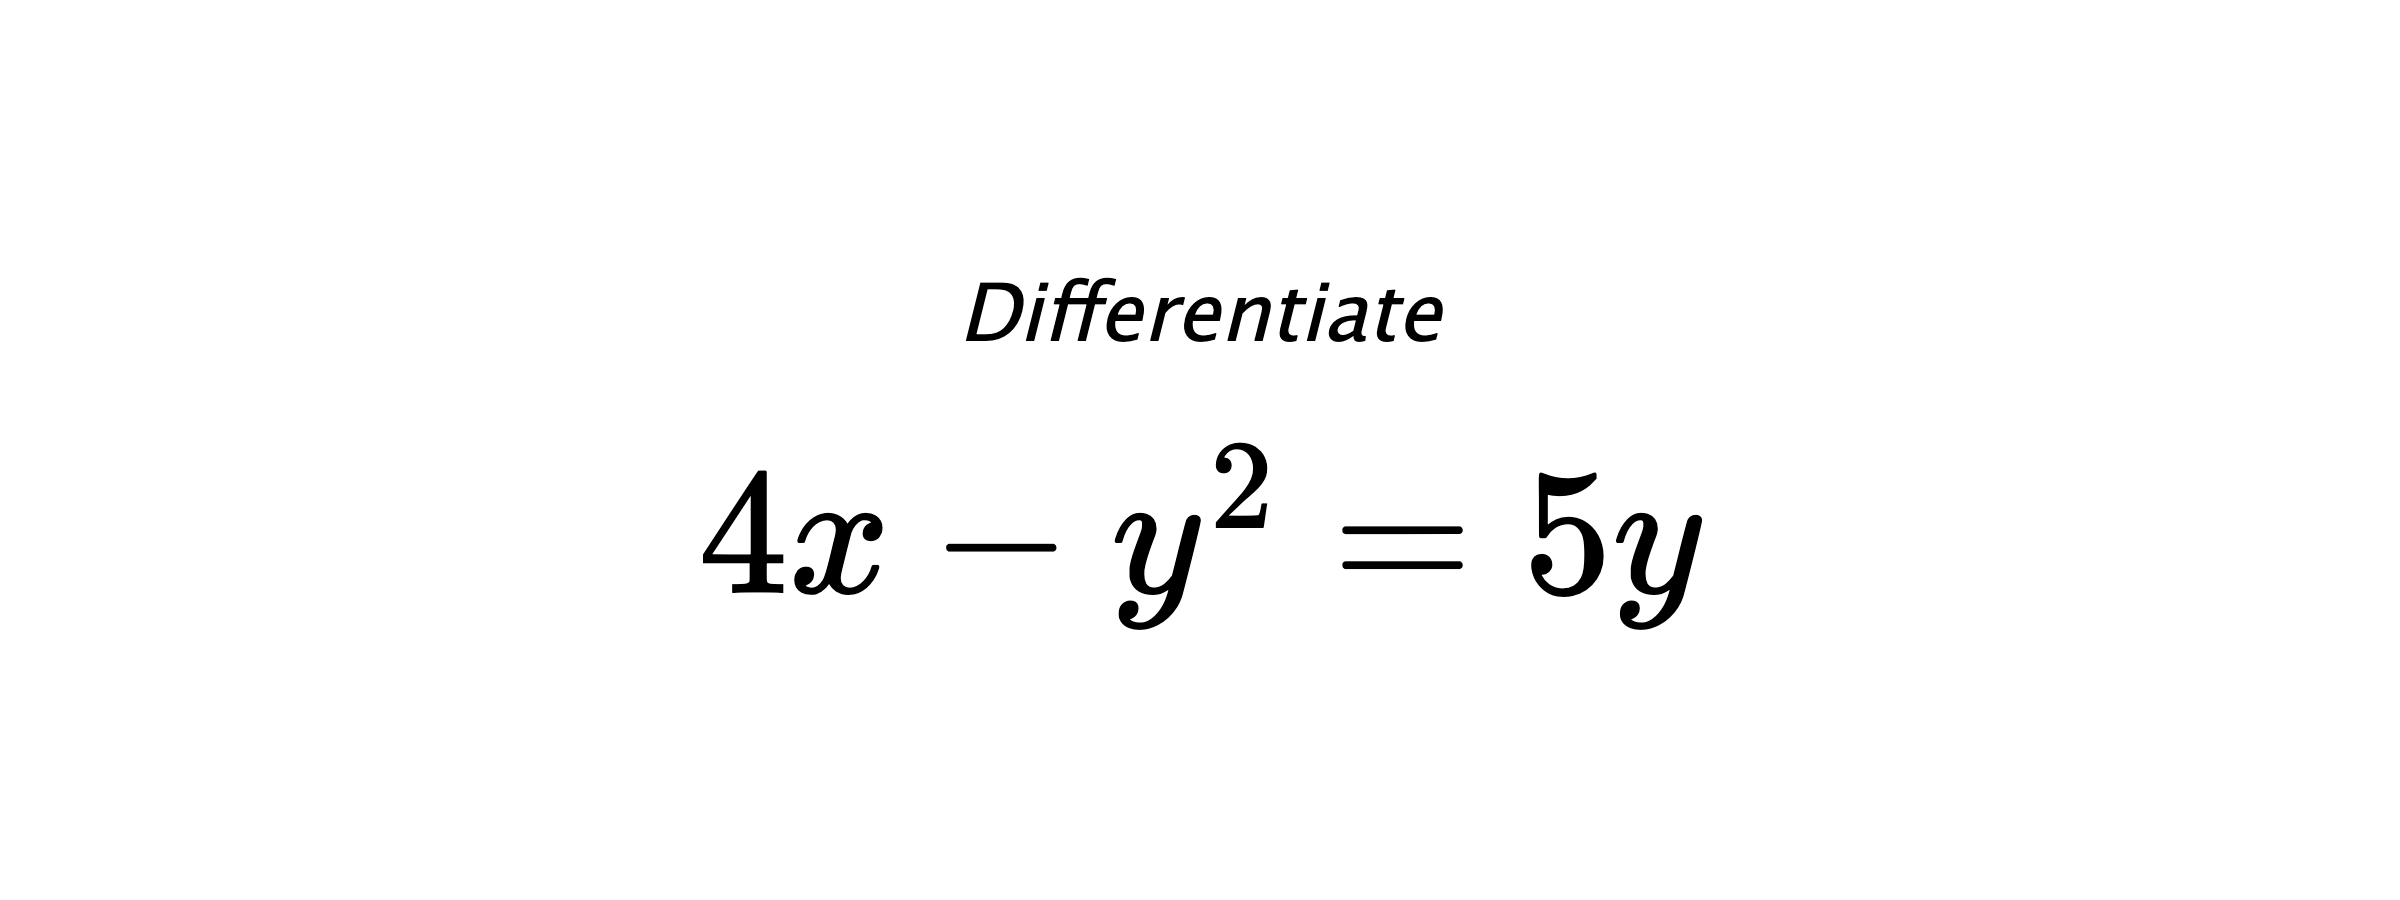 Differentiate $ 4x-y^2 = 5y $